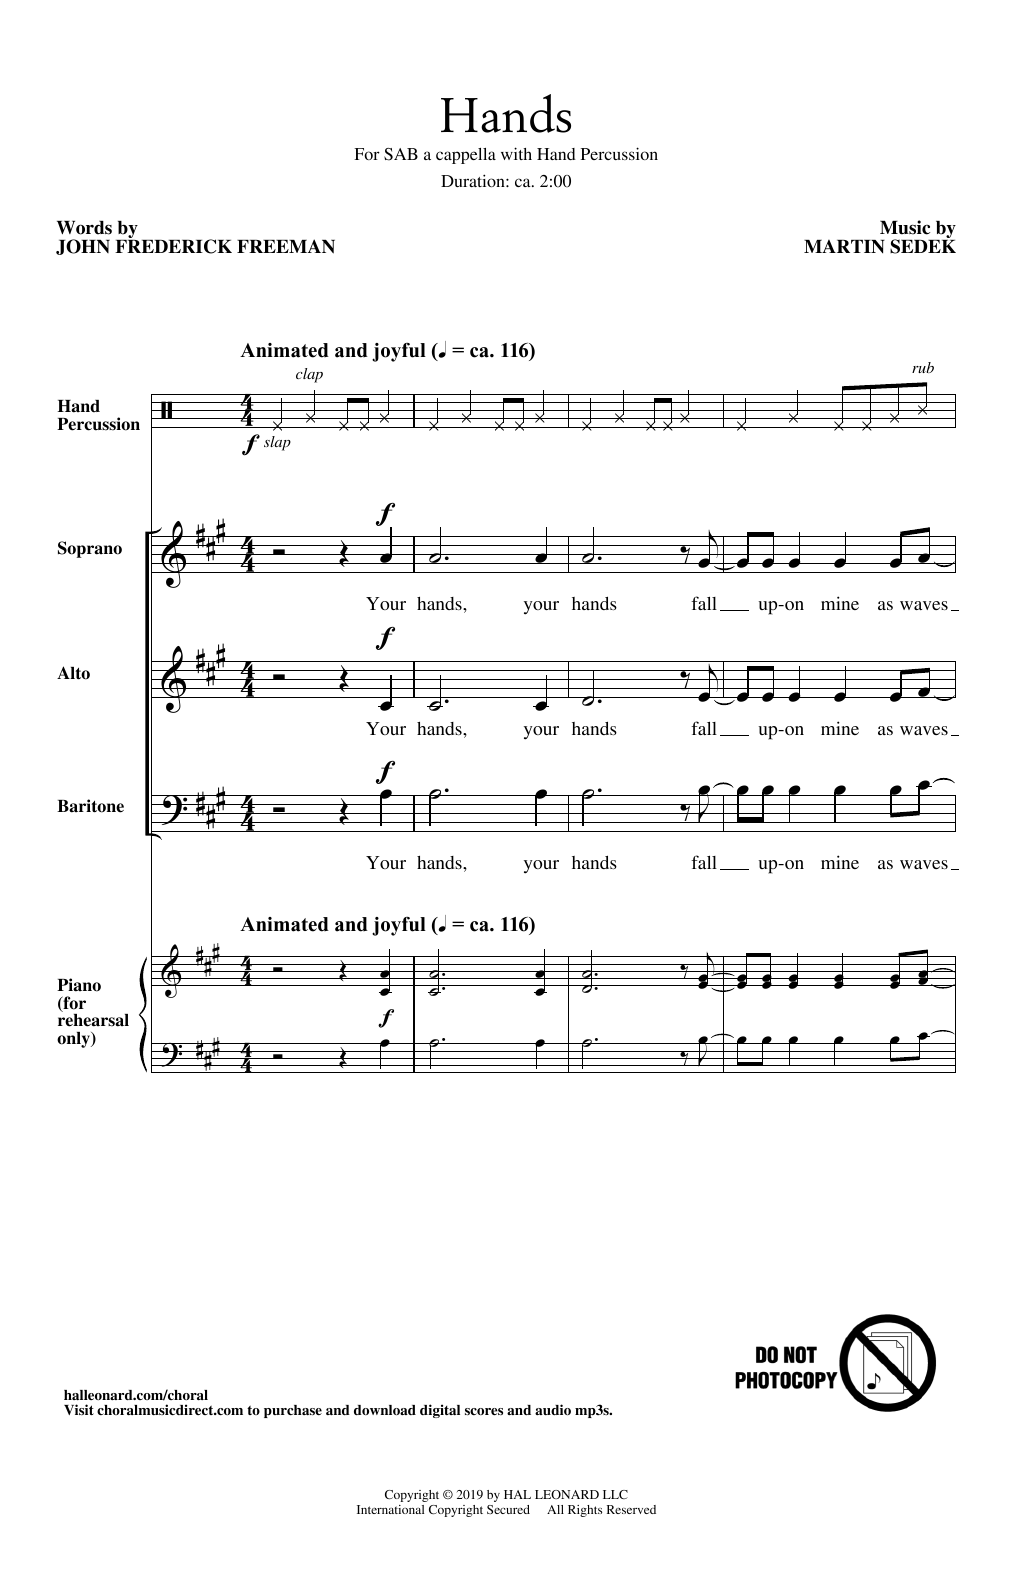 Martin Sedek Hands Sheet Music Notes & Chords for SAB Choir - Download or Print PDF